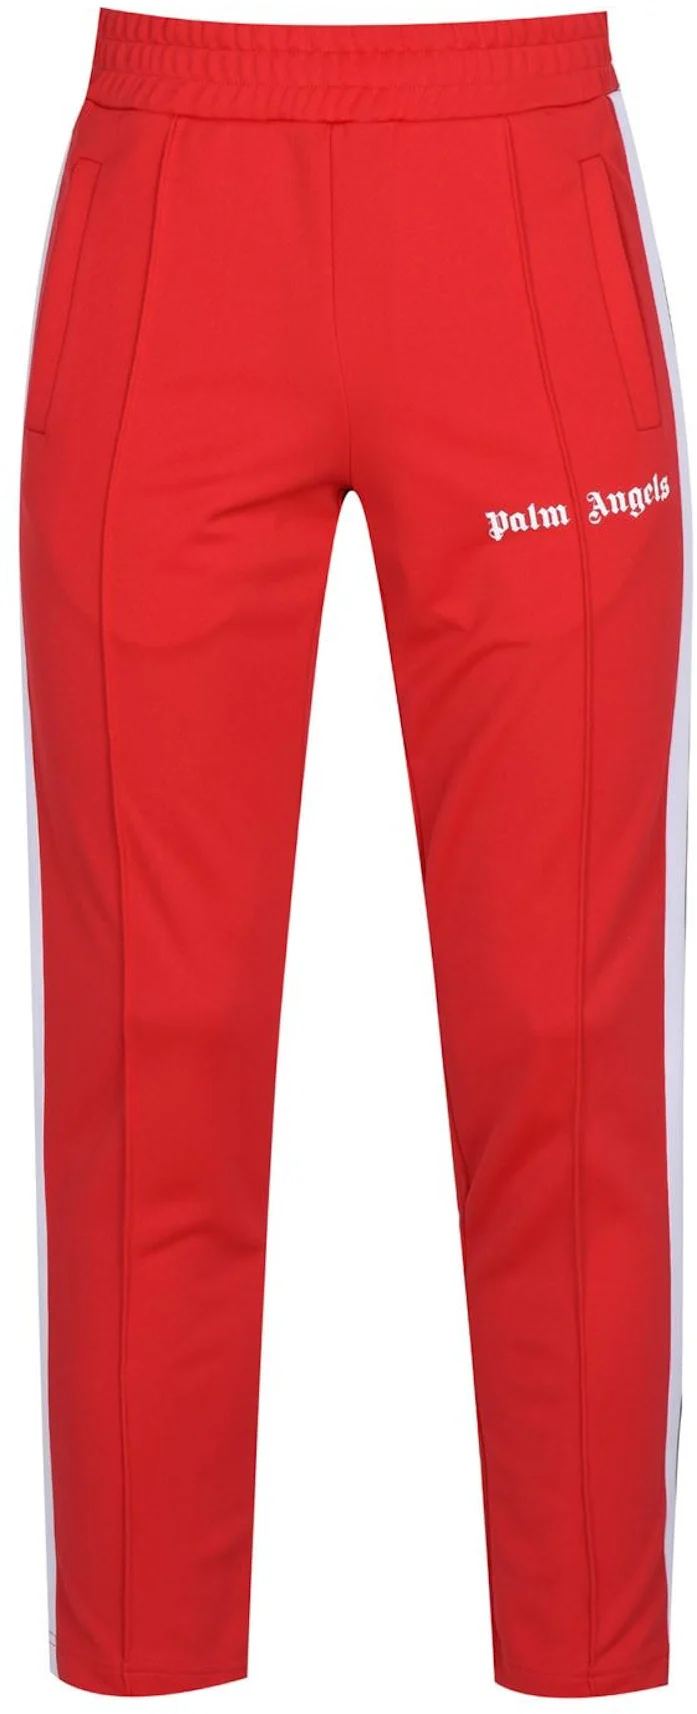 official outlet sale online Men's authentic Palm Angel fleece pants size  Small.